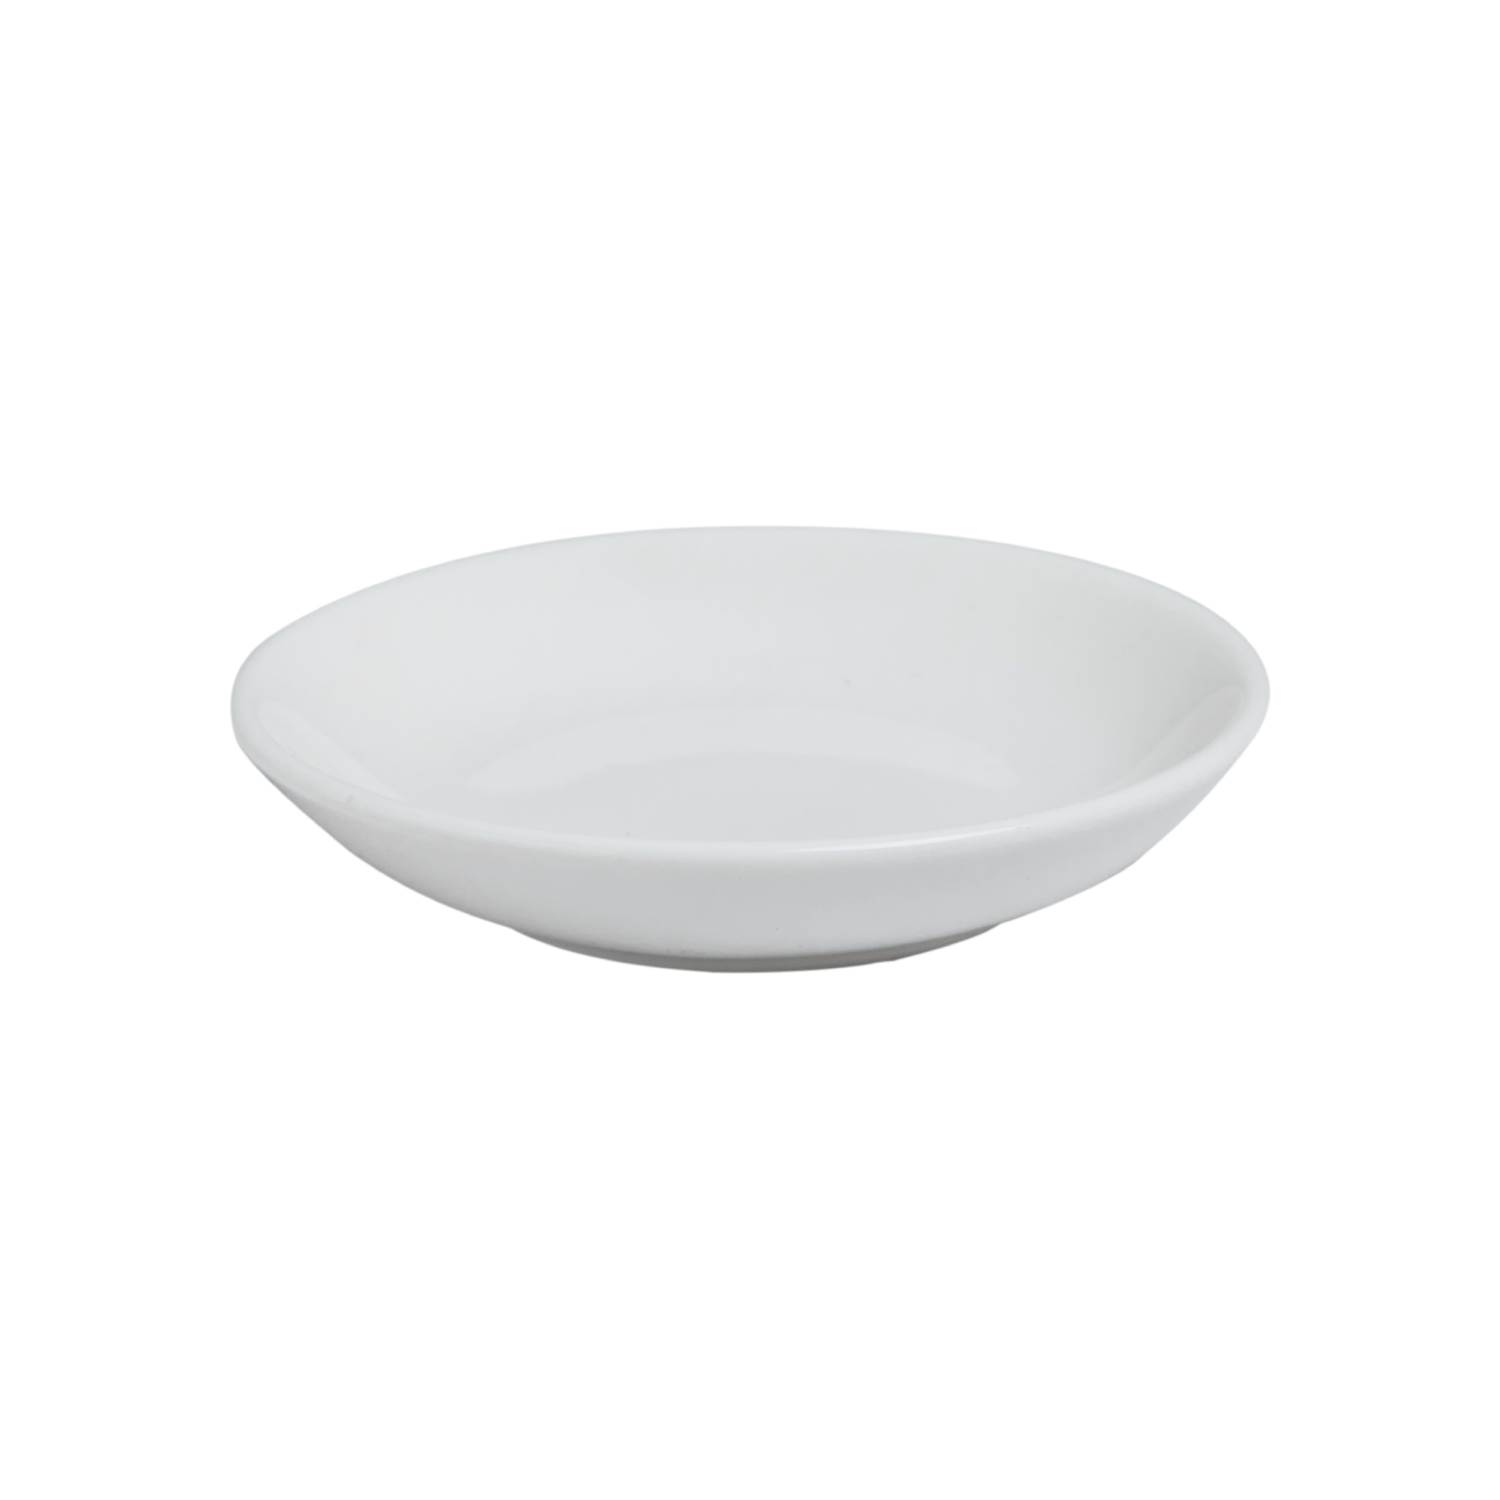 Baralee Simple Plus Small Dish 8.5 Cm (3 3/8")